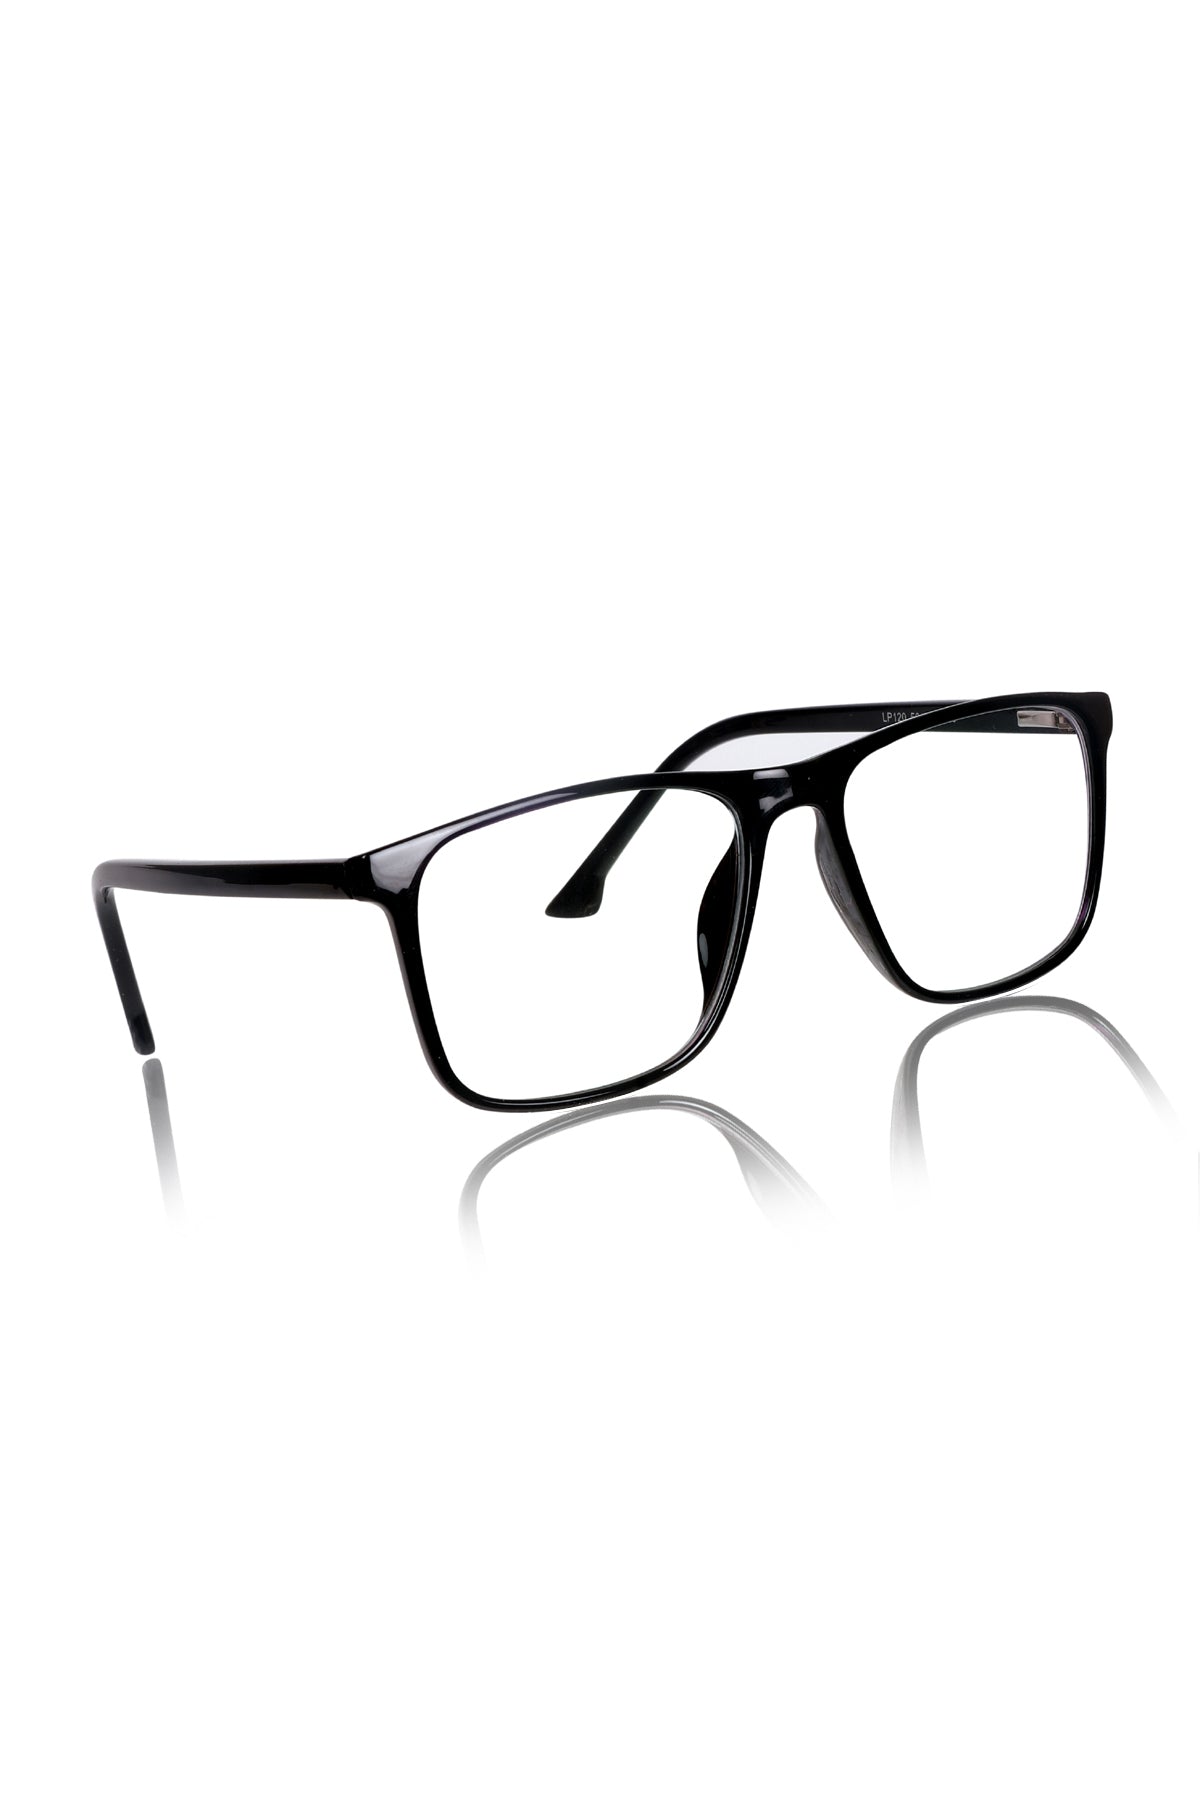 Jodykoes® Premium Series Pure Acetate Sheet Rectangle Eyewear Frame | Modern Fashionable Trending Spectacle Eyeglasses For Men and Women (Opaque Black) - Jodykoes ®